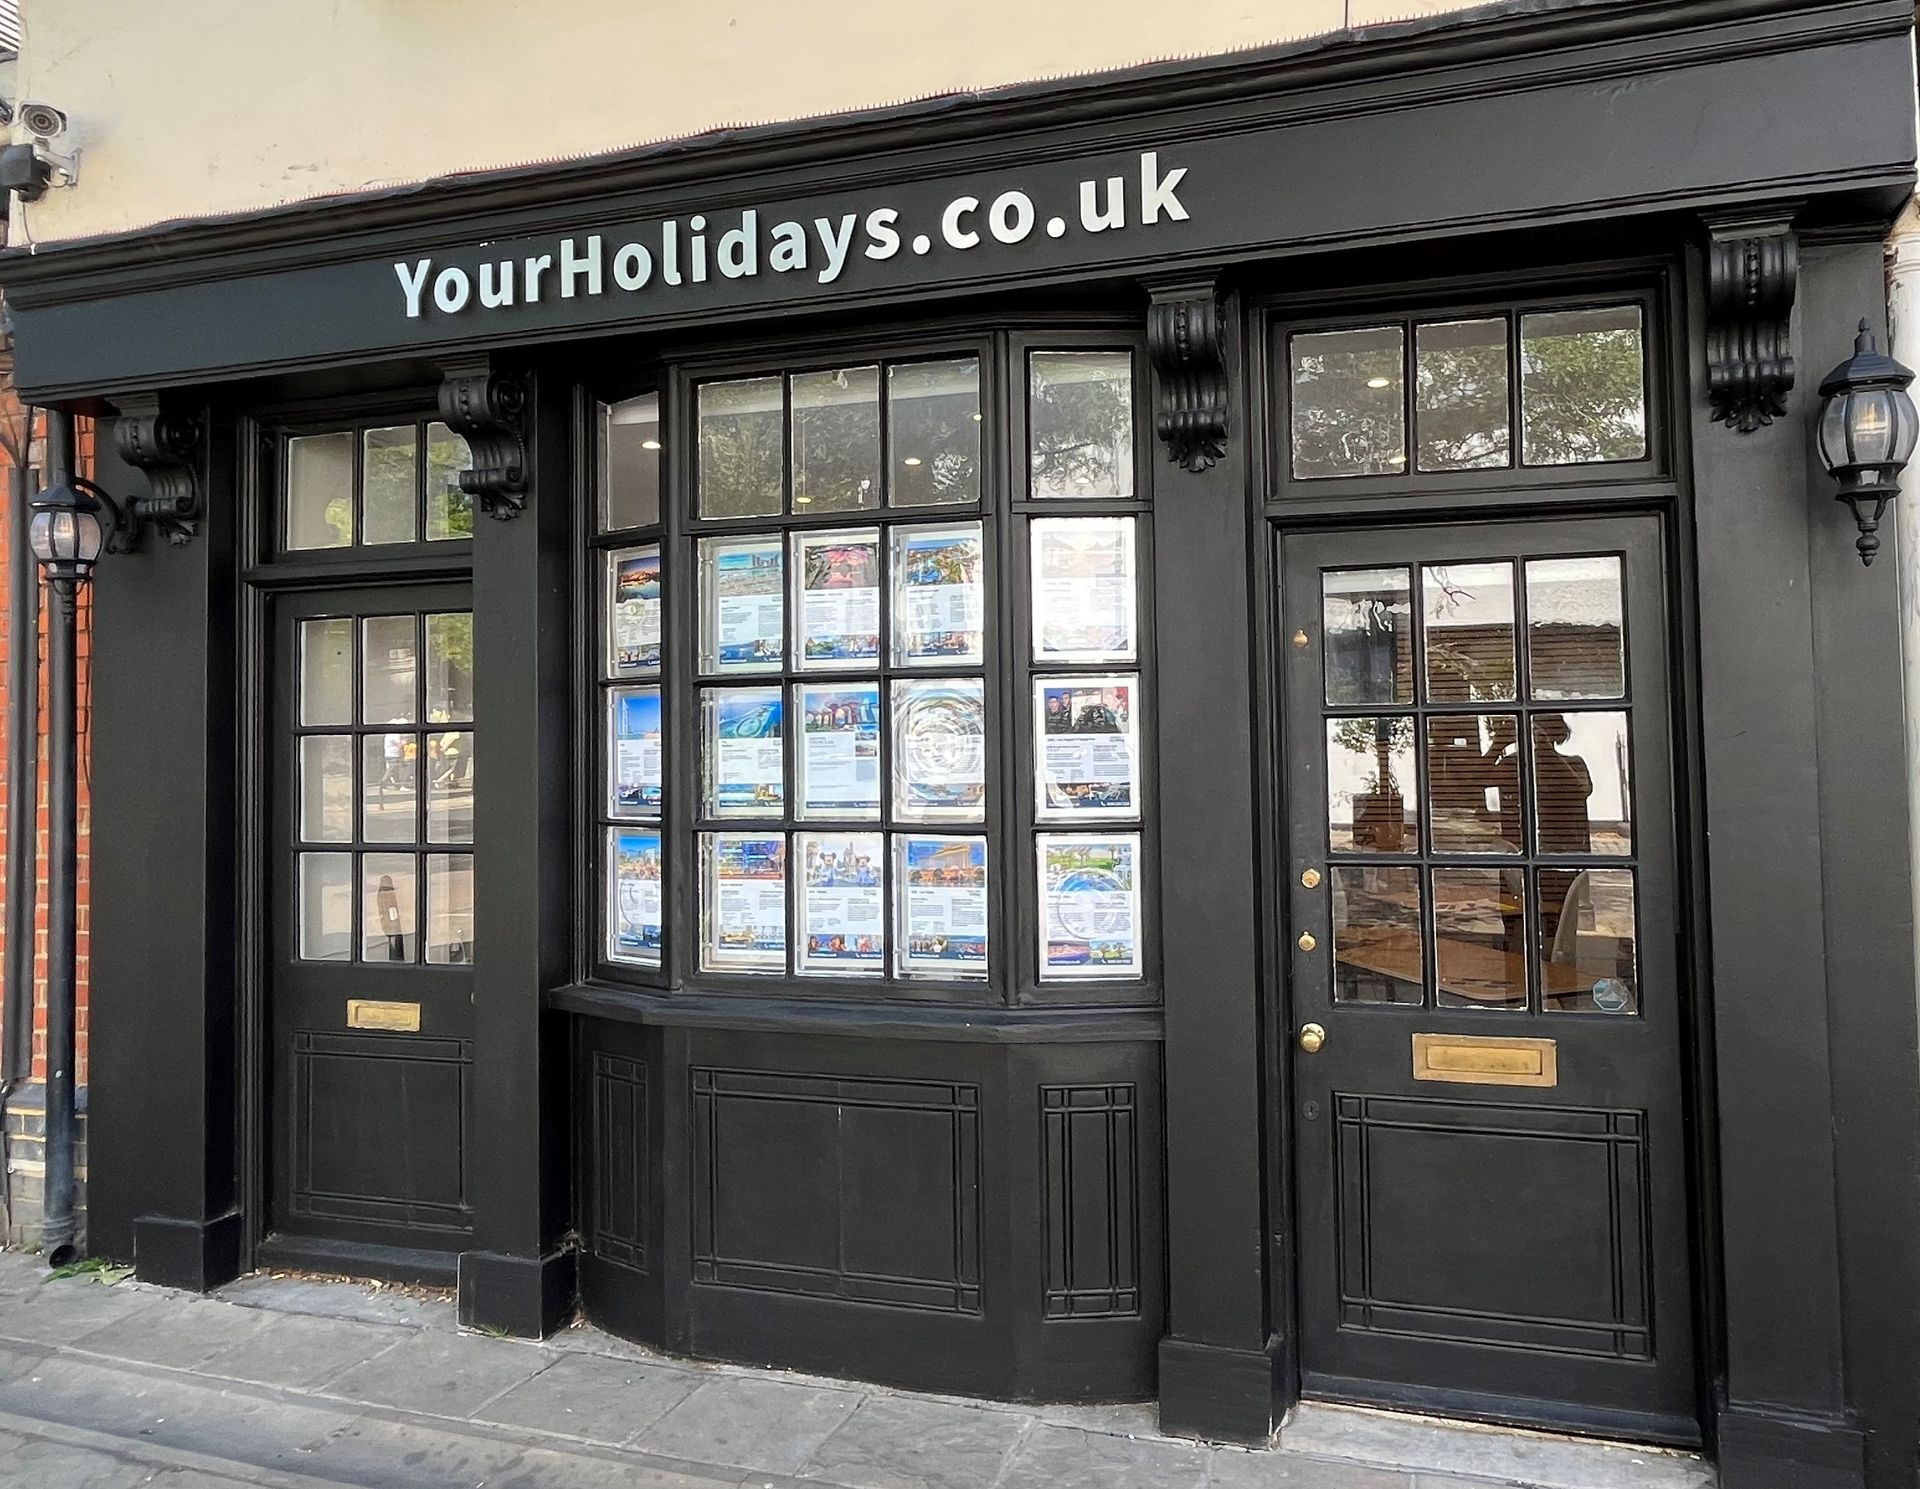 YourHolidays.co.uk, 49 Thames Street, Windsor SL4 1PU